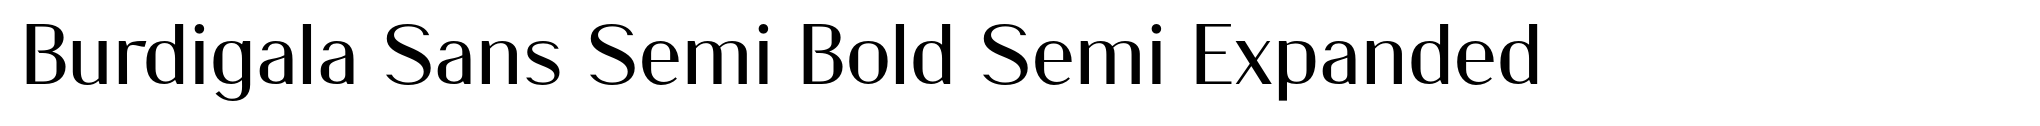 Burdigala Sans Semi Bold Semi Expanded image